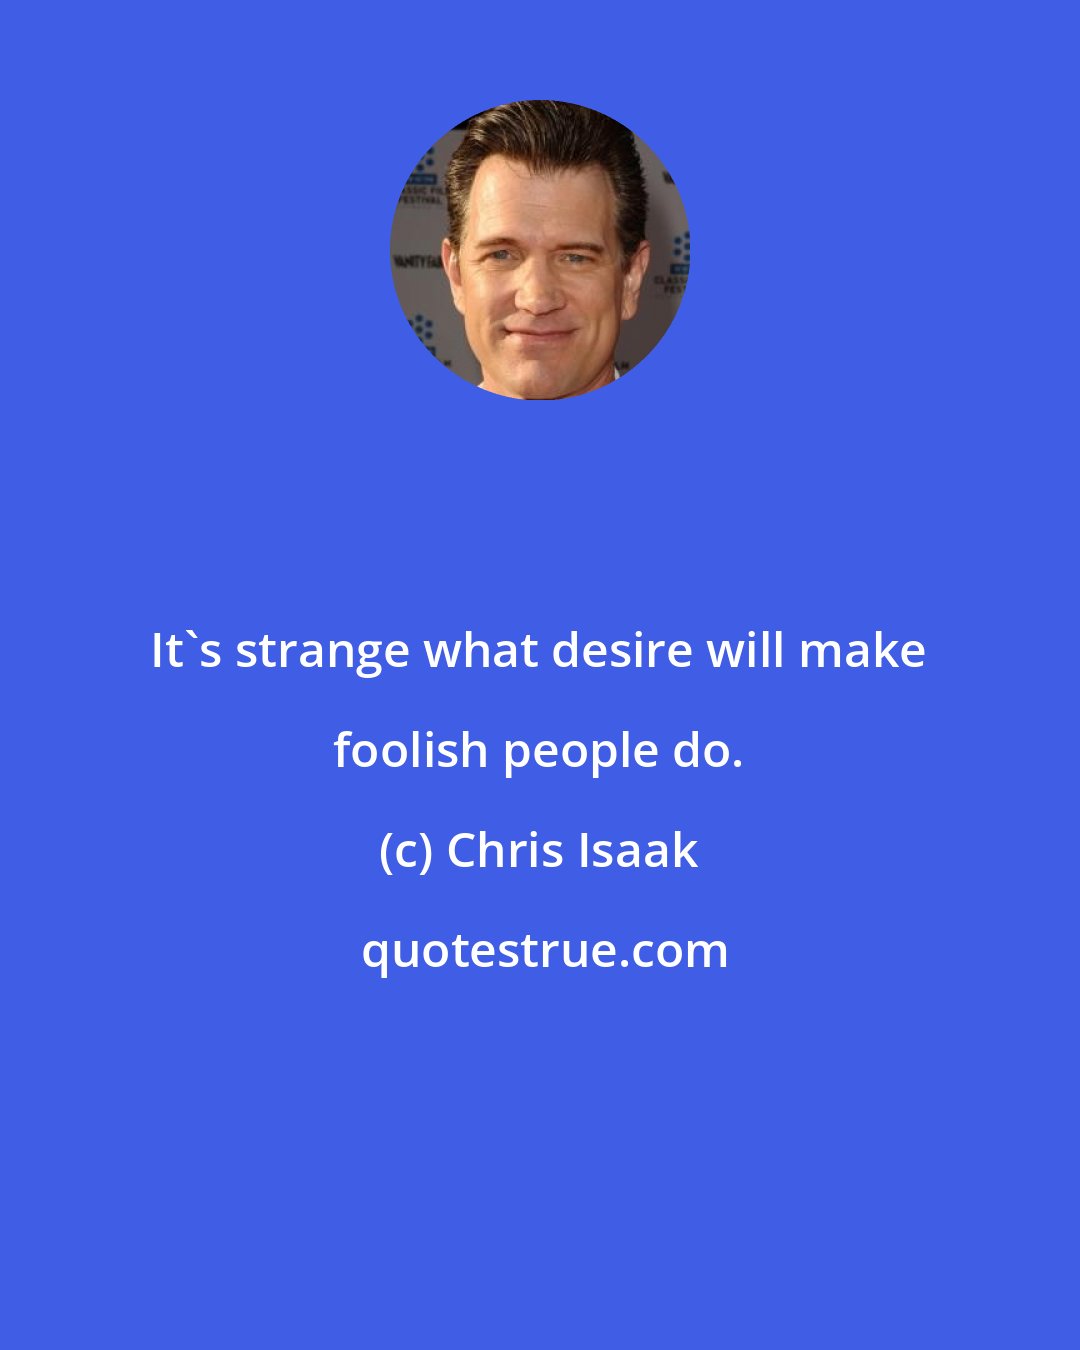 Chris Isaak: It's strange what desire will make foolish people do.